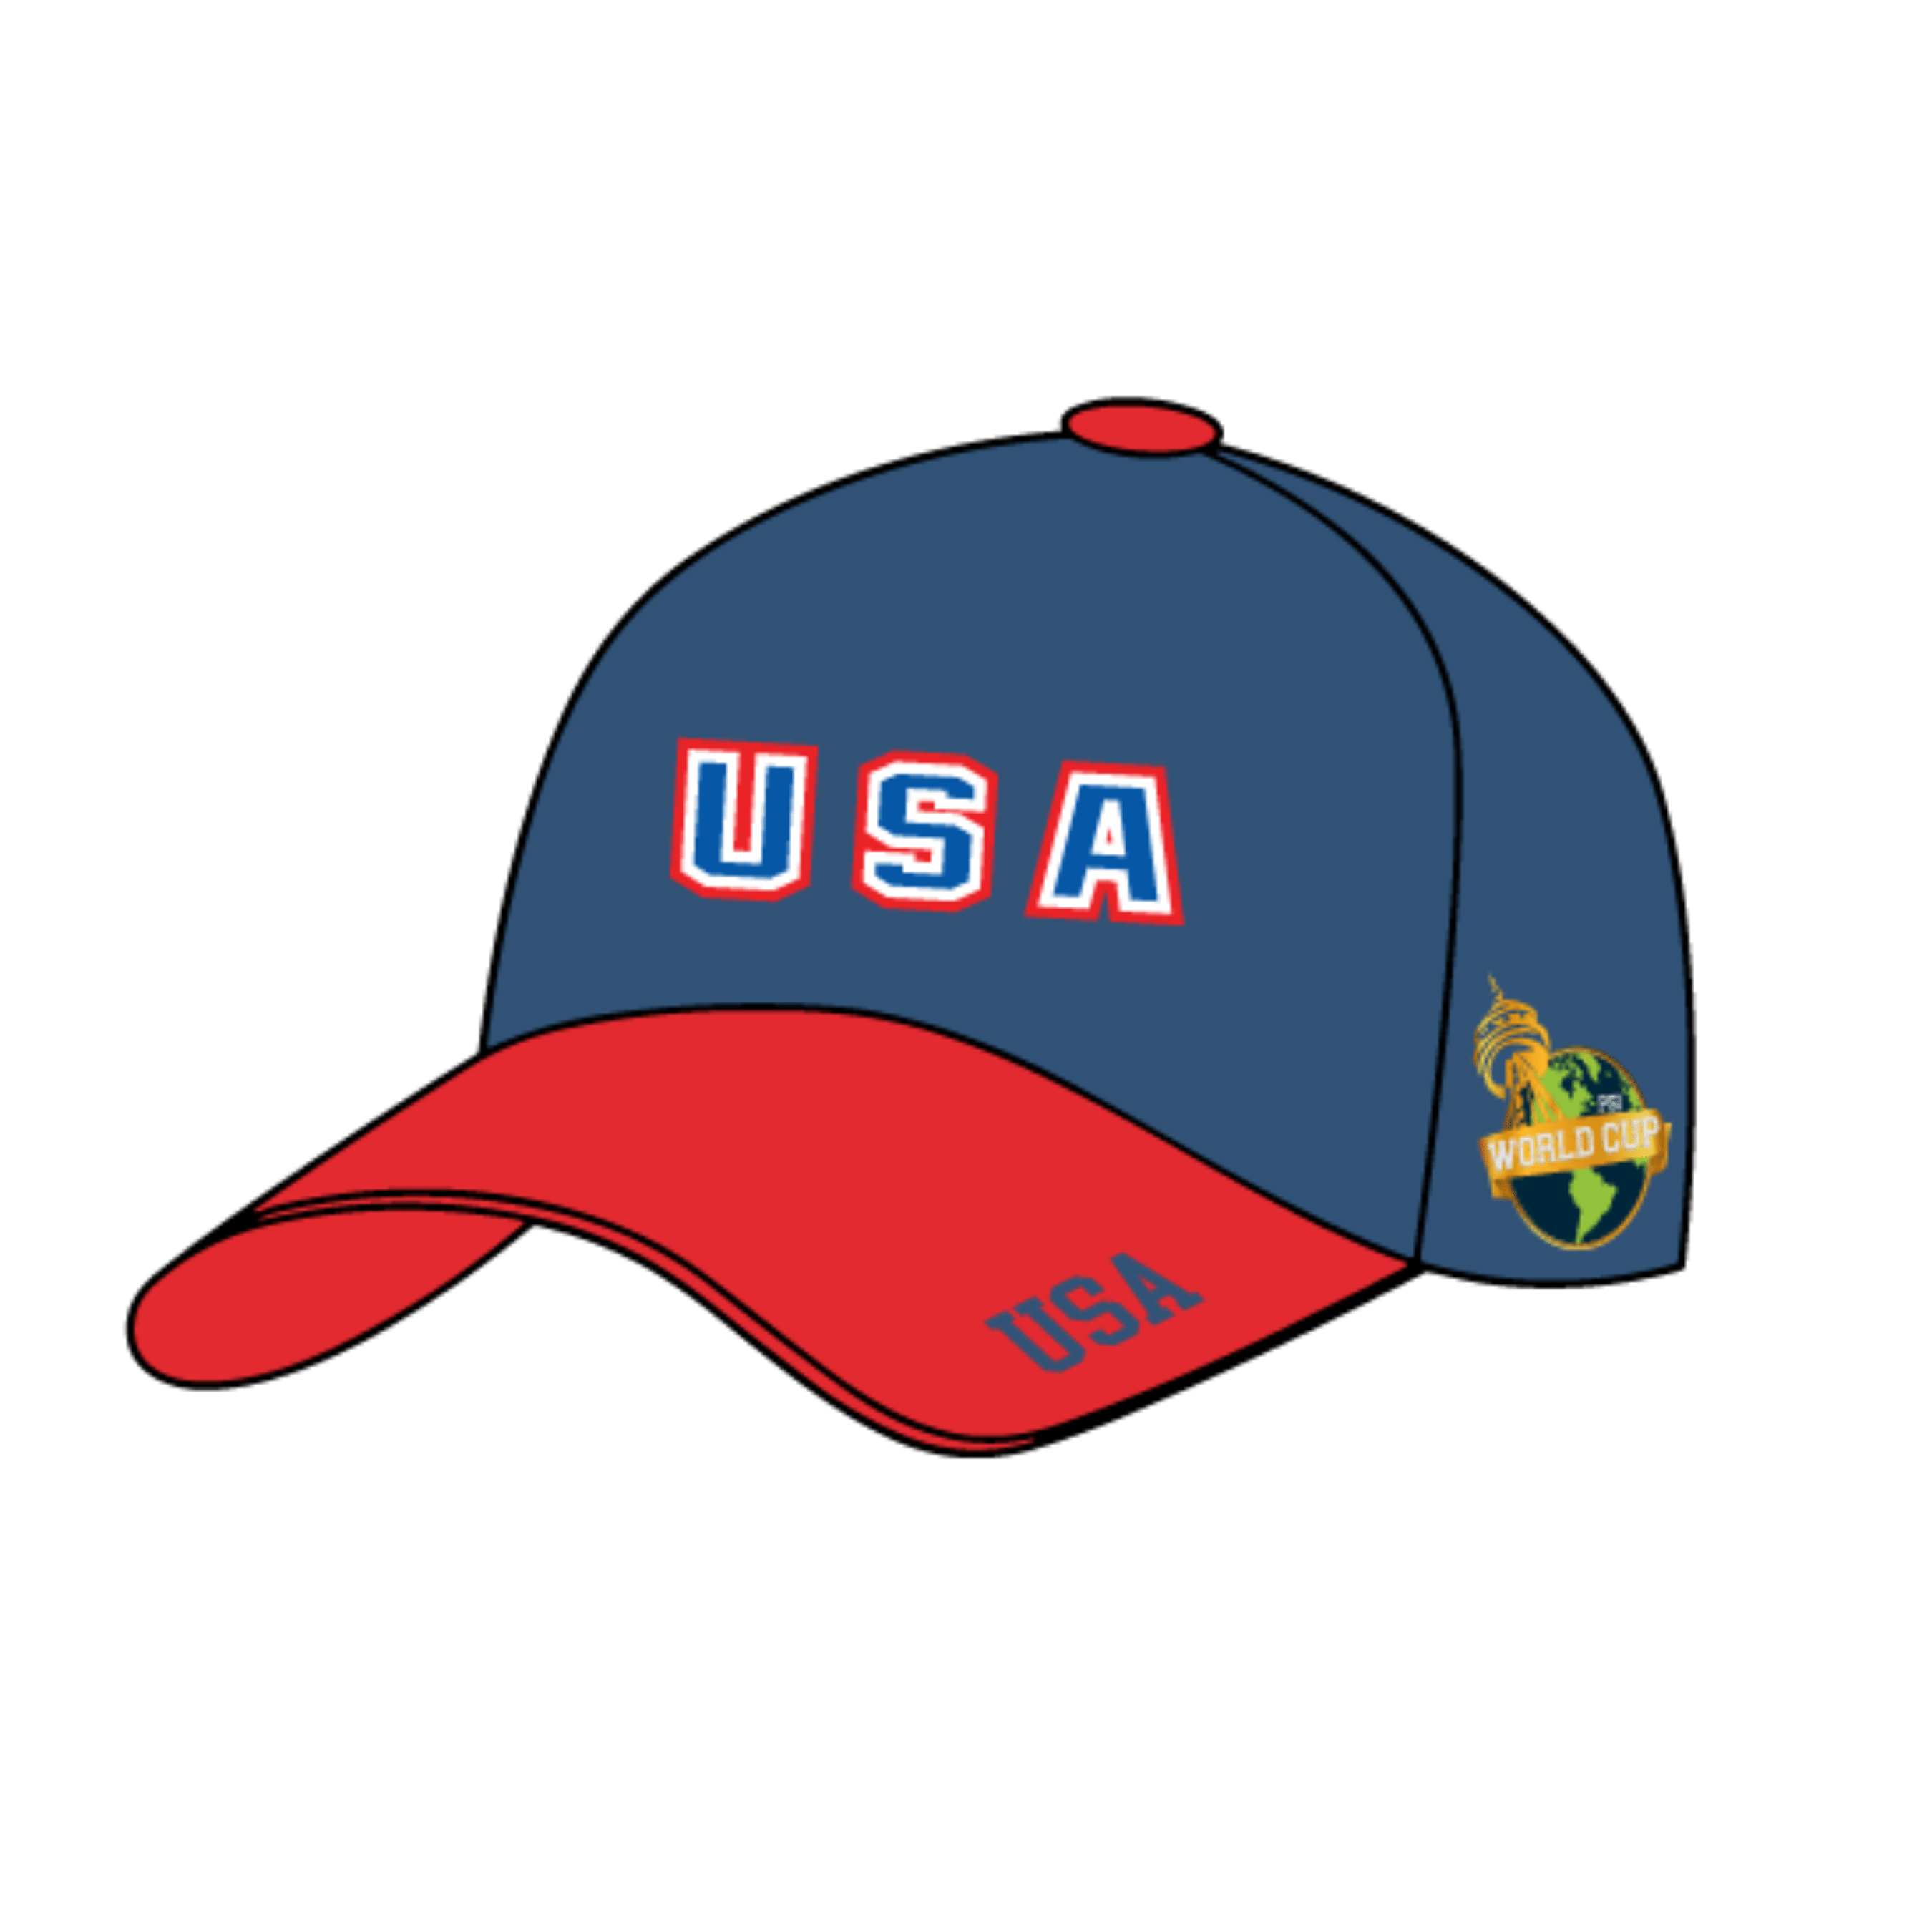 USA:n sininen MM-hattu